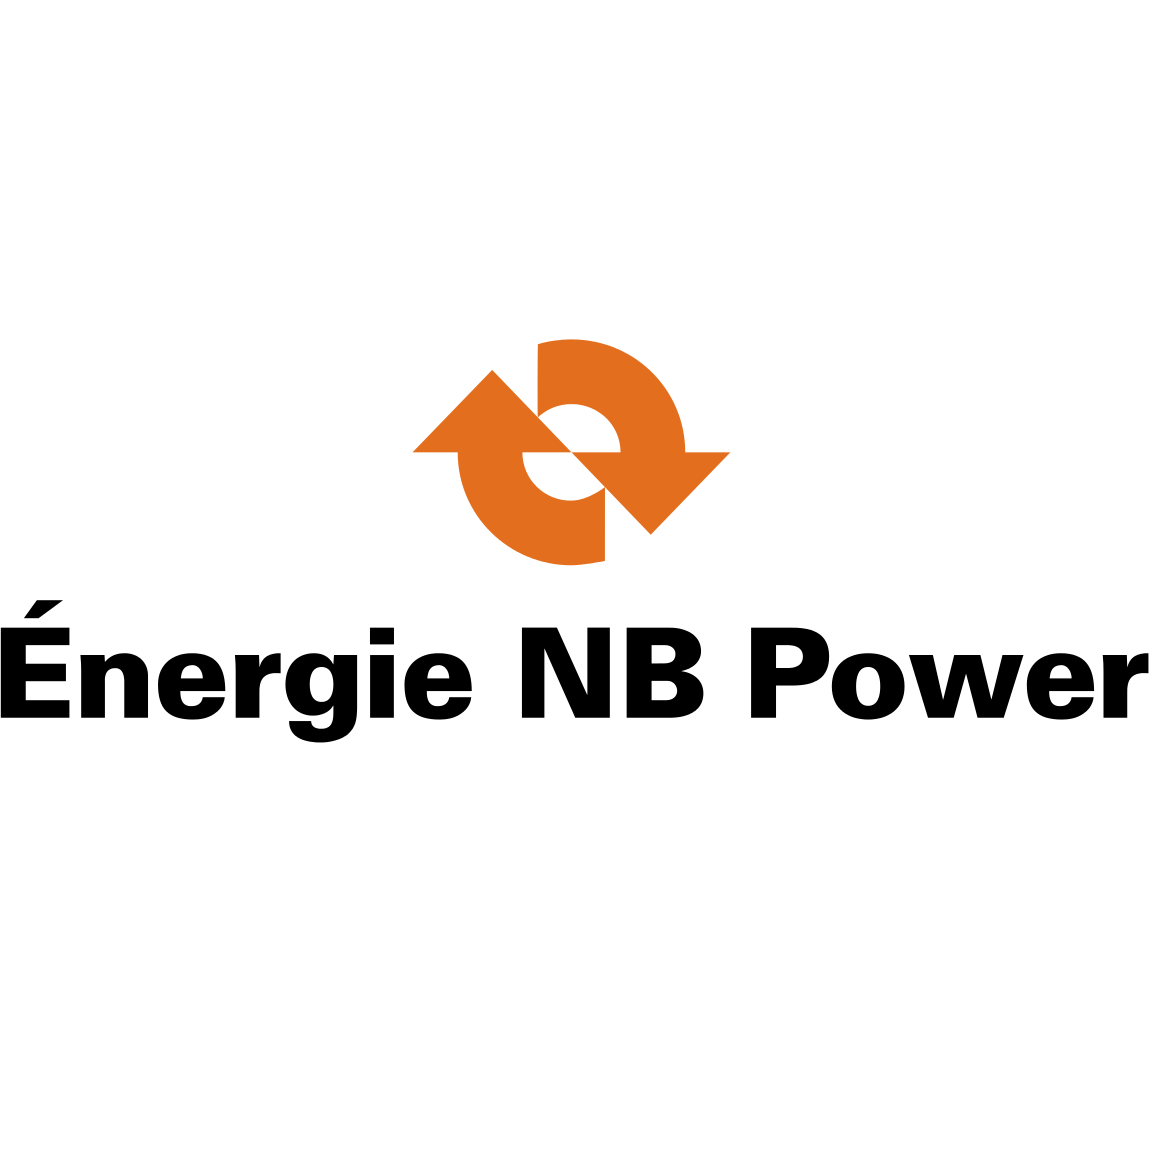 Bigraph Orange White Square Logo - Members Nuclear Association